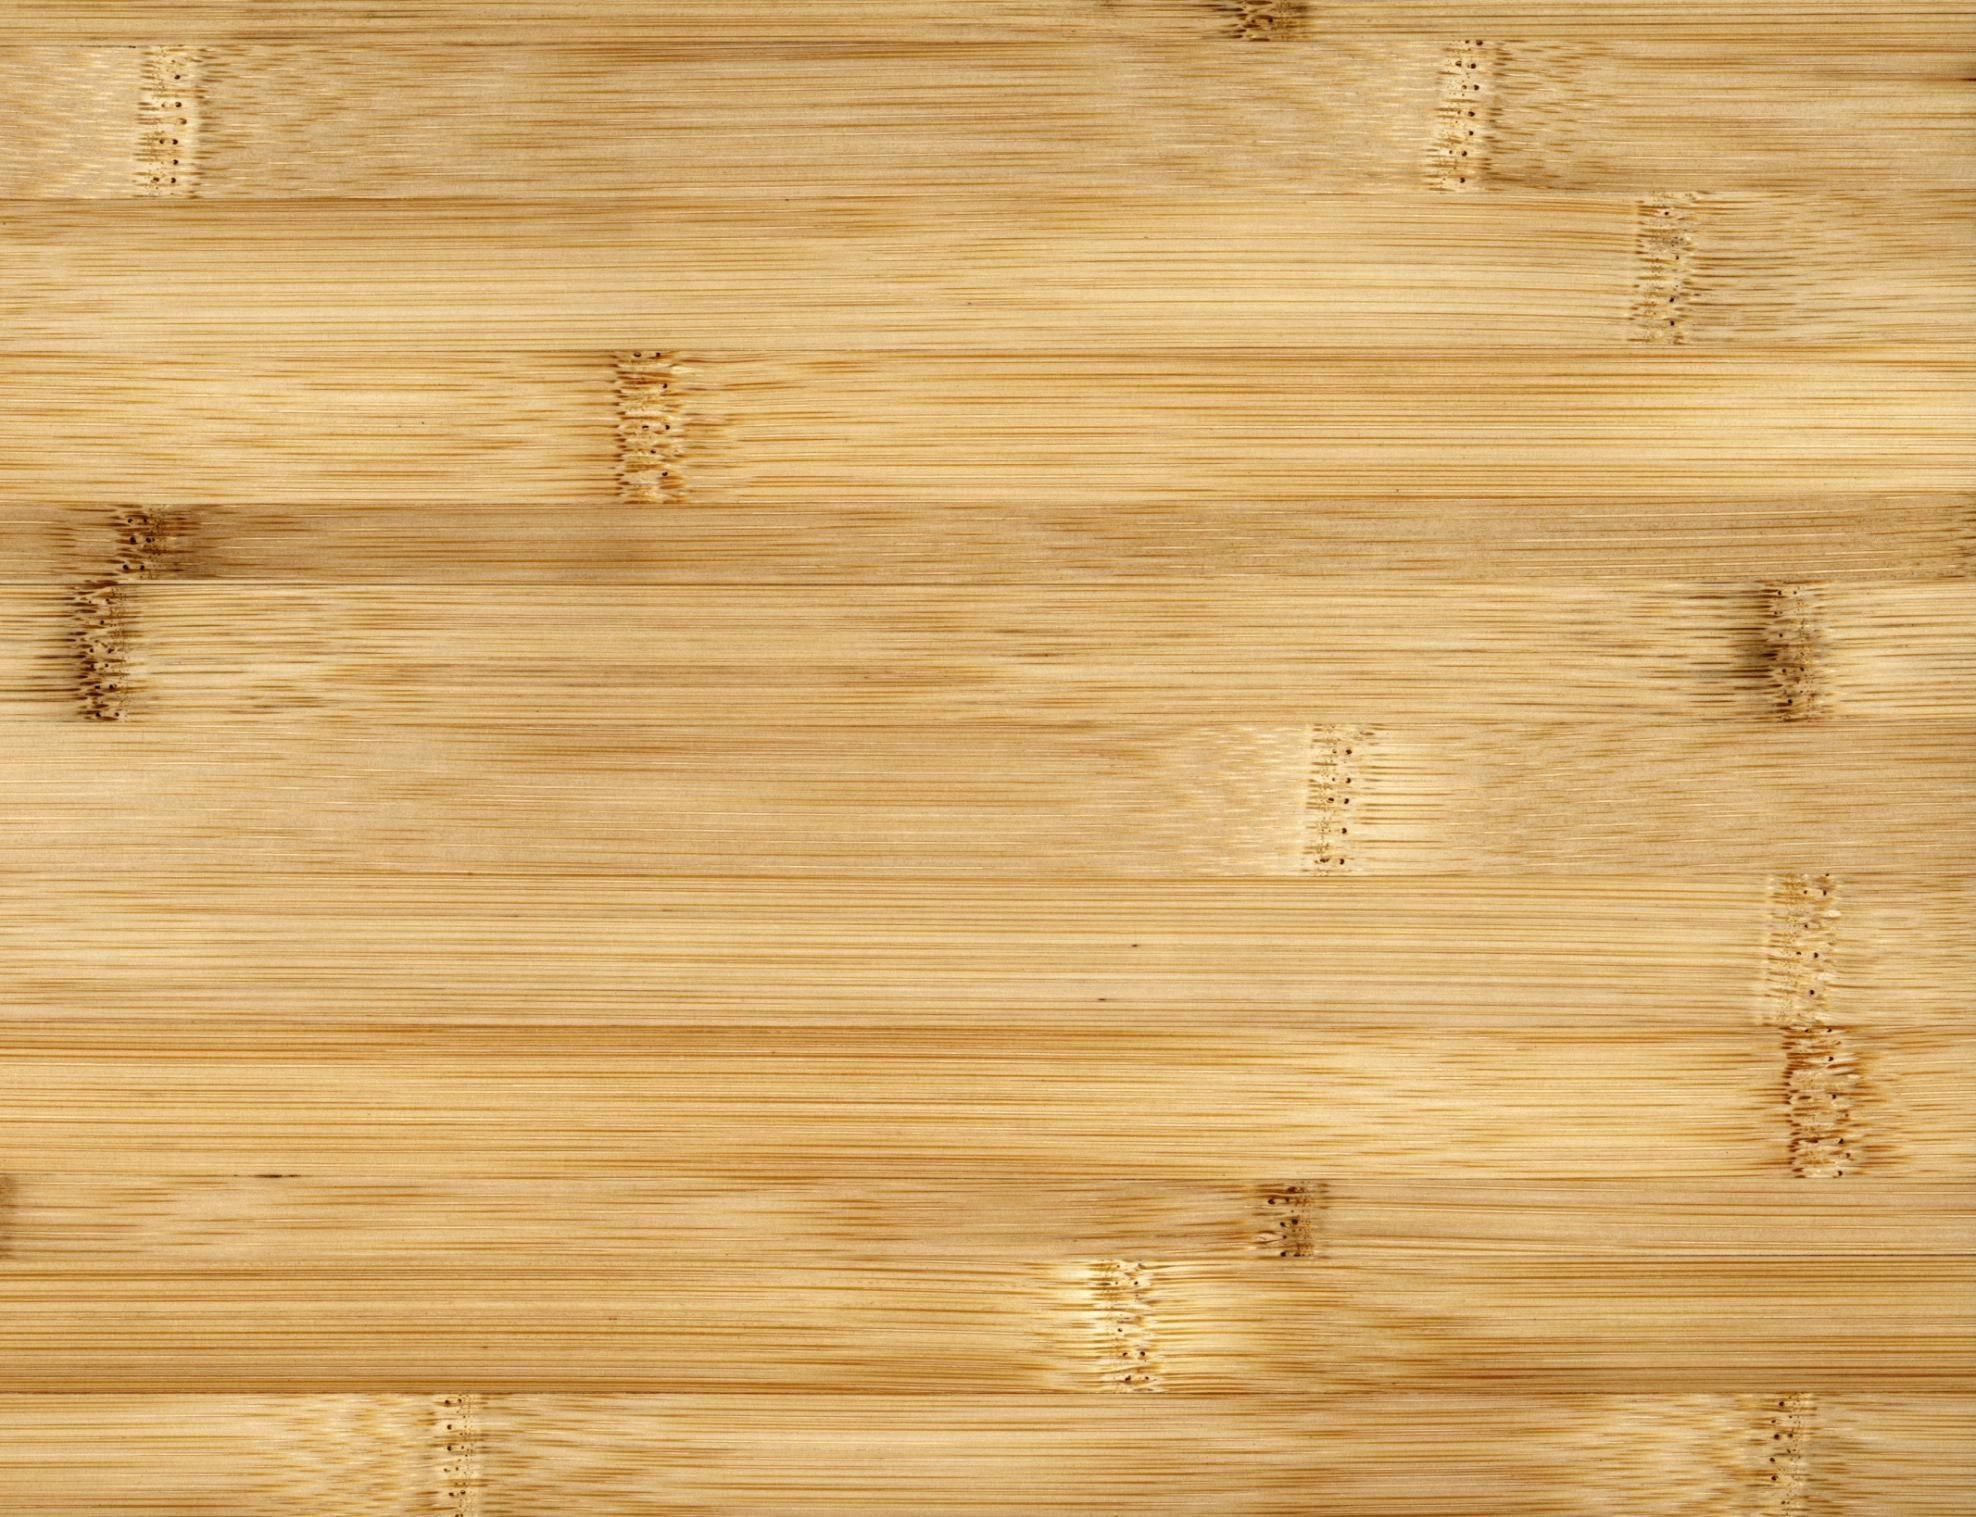 28 Famous Hardwood Floor solutions 2022 free download hardwood floor solutions of 18 new bamboo floors pics dizpos com with regard to bamboo floors fresh 50 beautiful redoing hardwood floors 50 s stock of 18 new bamboo floors